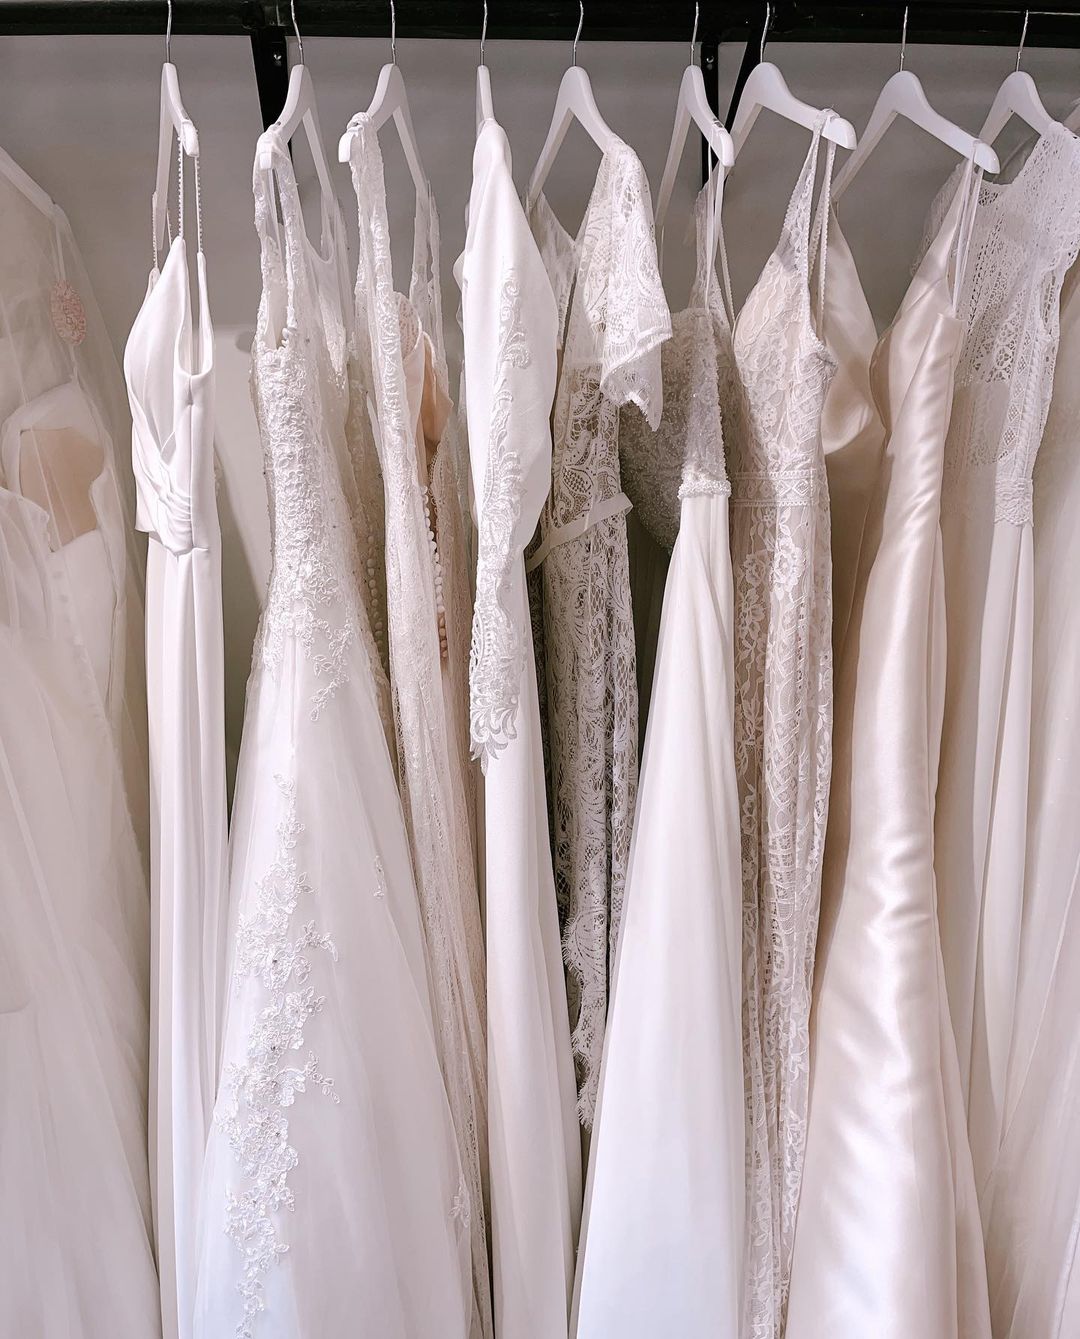 What to Wear Under a Wedding Dress